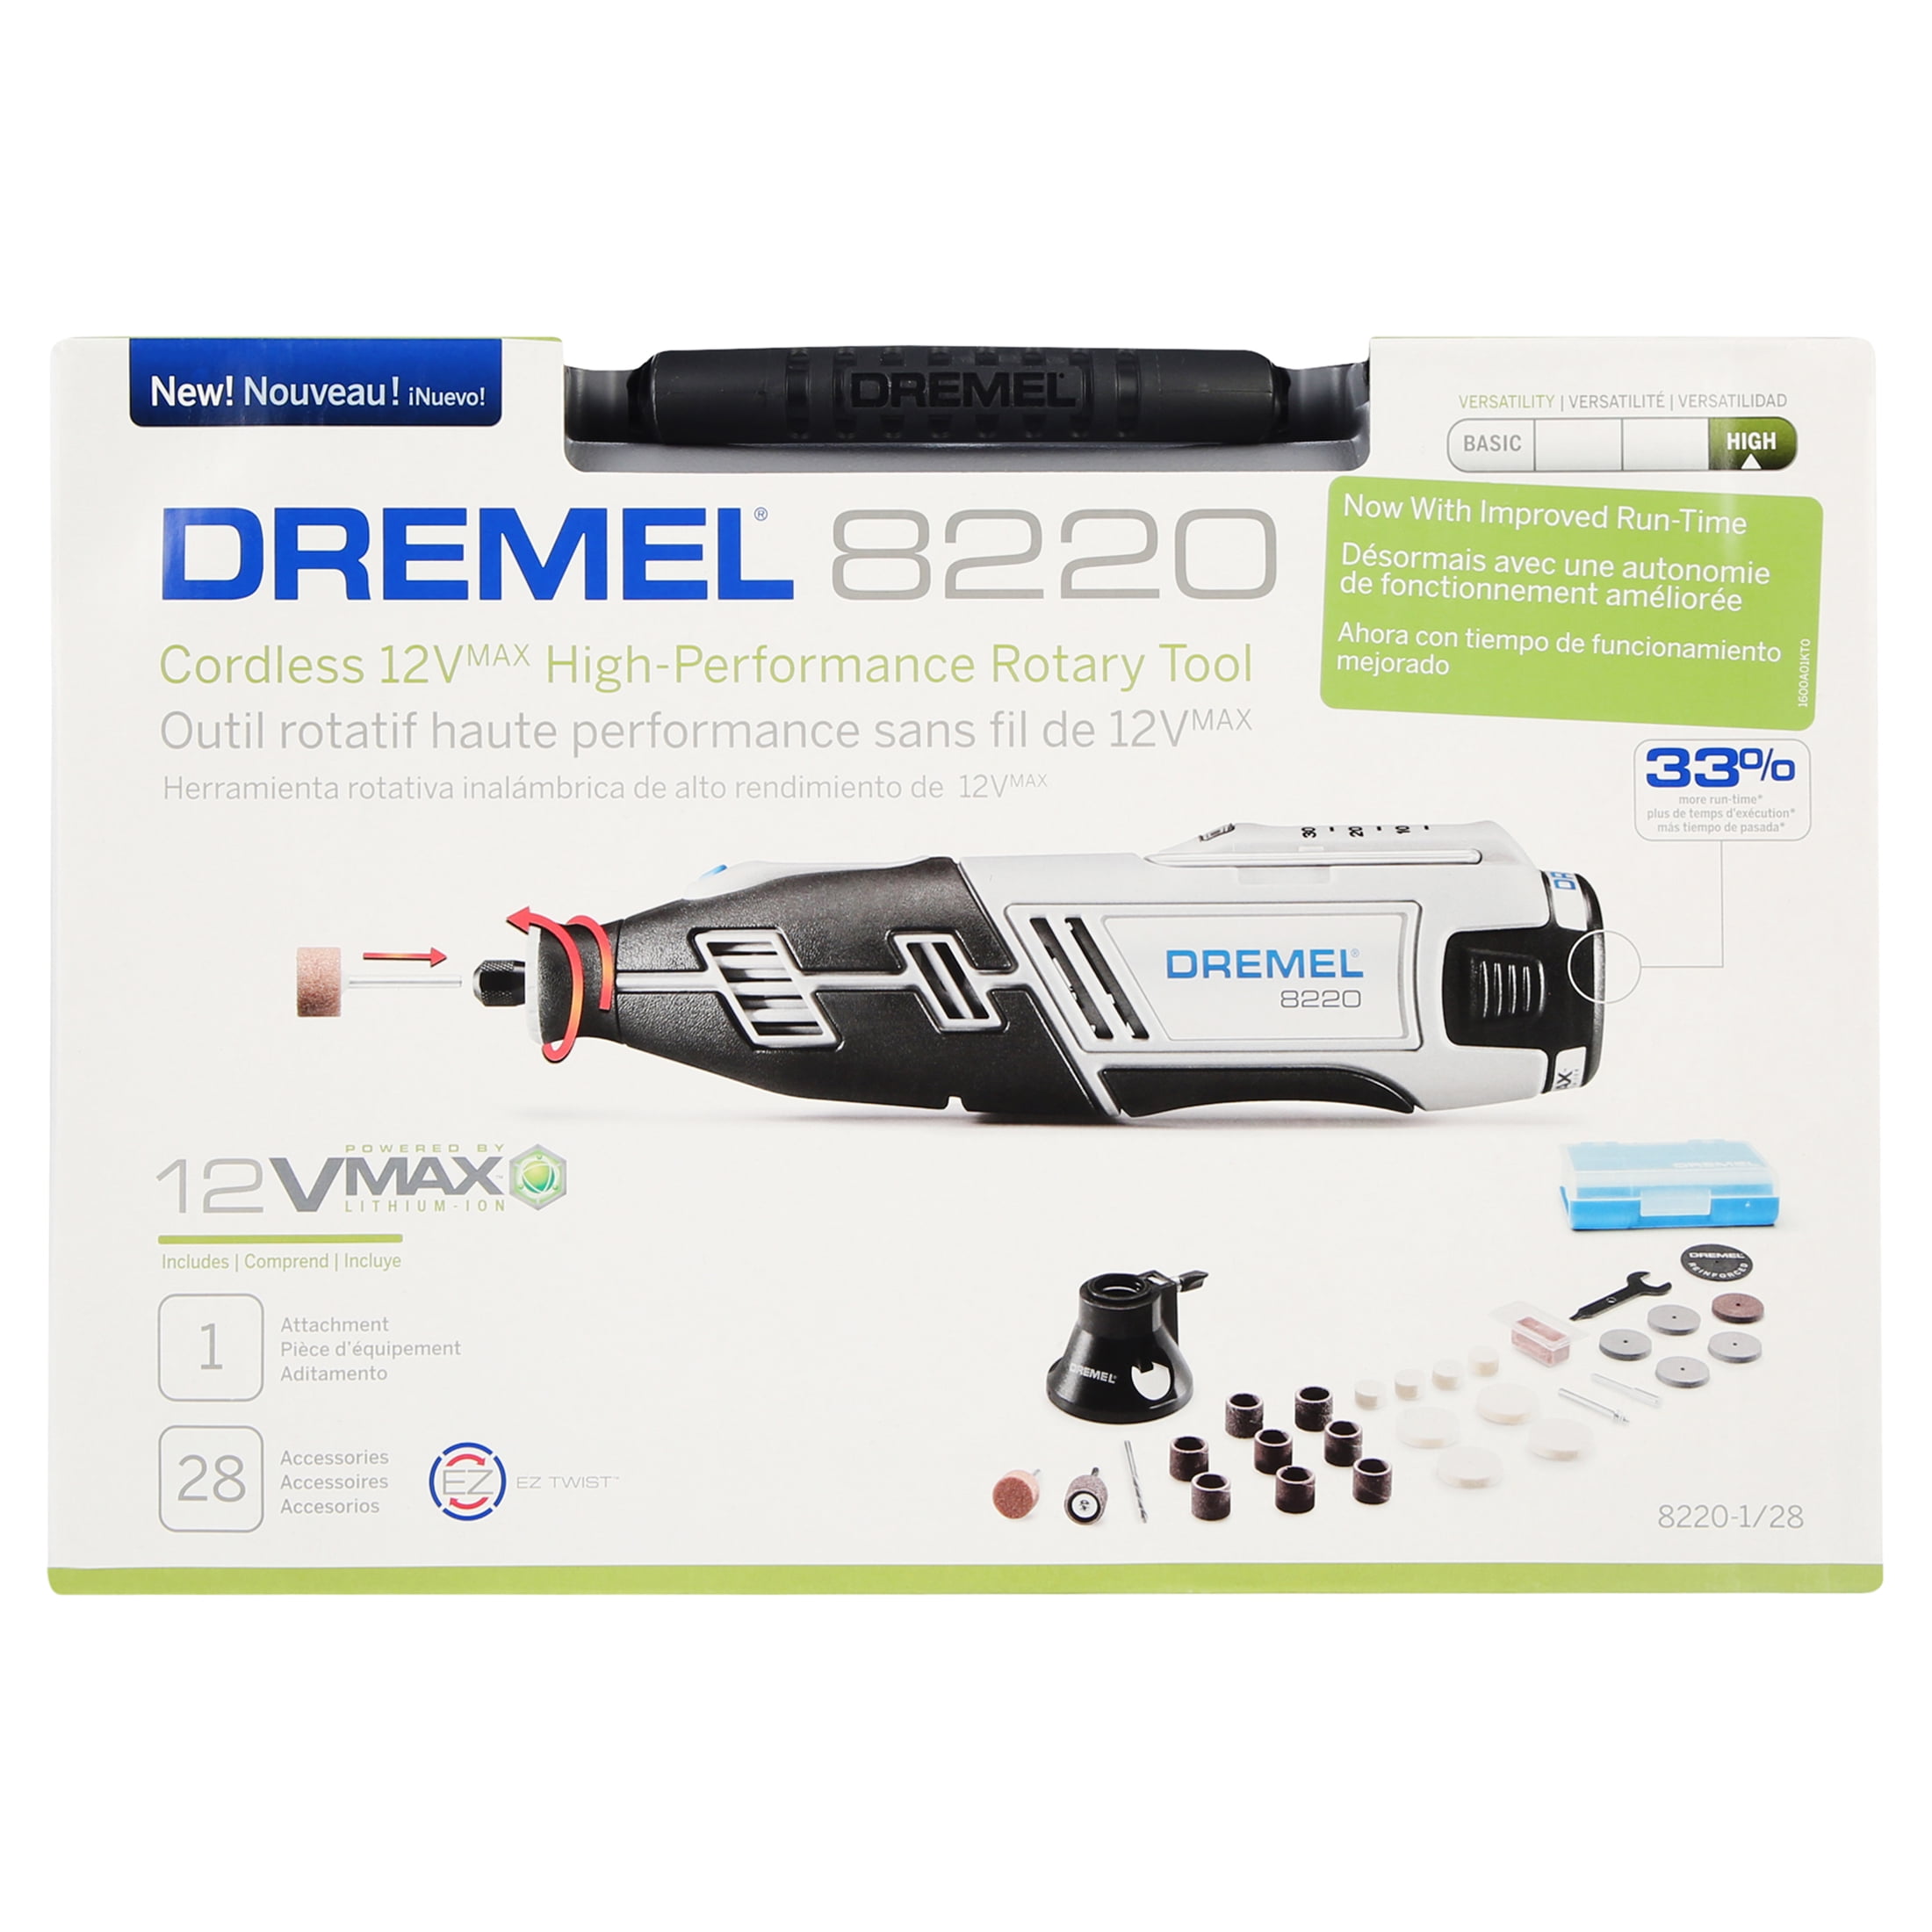 Dremel 8220 Cordless 12V High Performance Rotary Tool - Roller